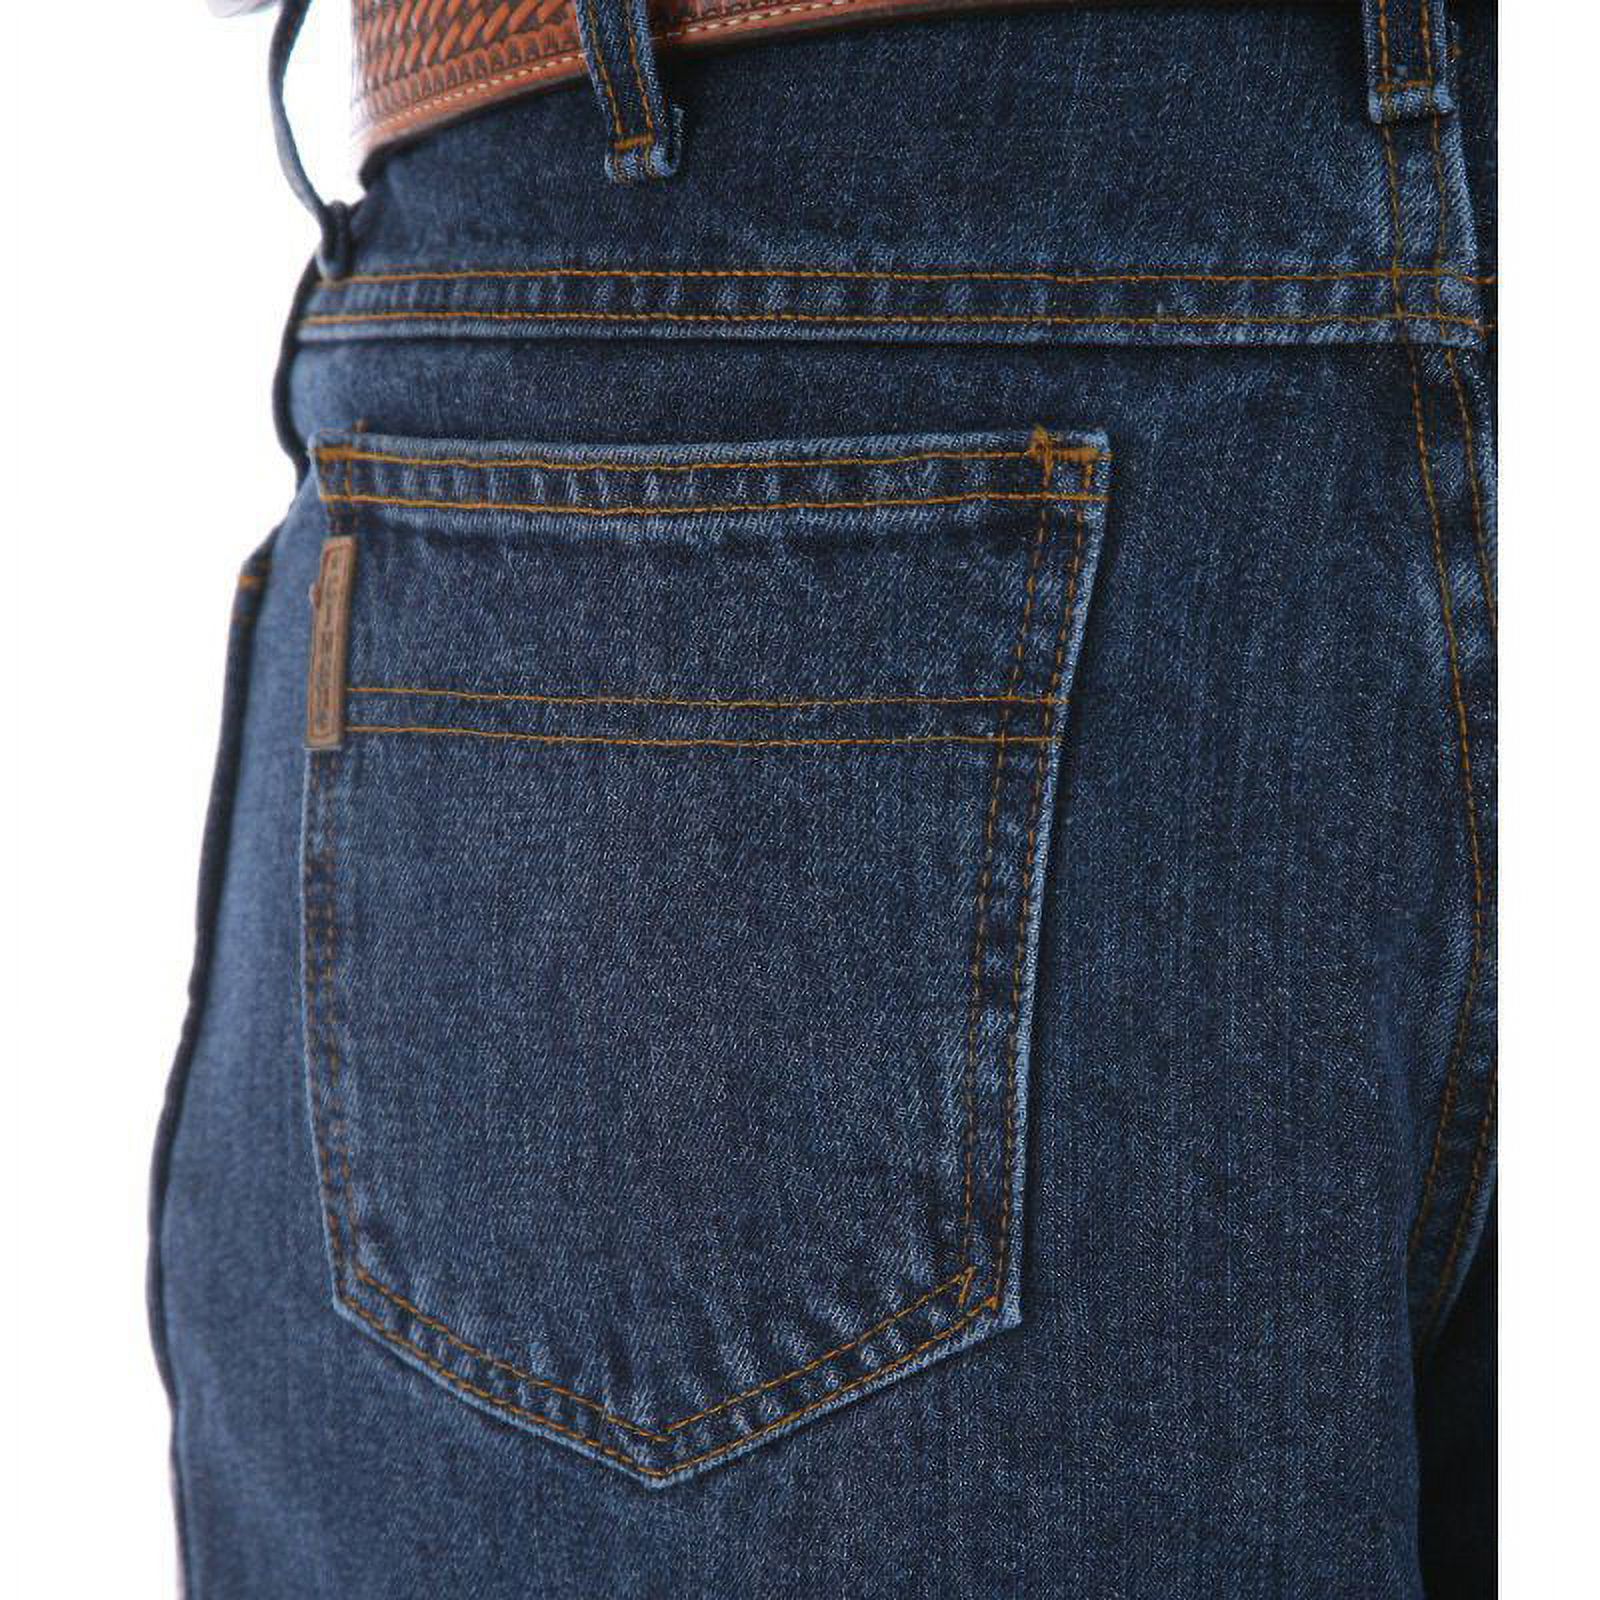 Cinch Apparel Mens Green Label Original Fit Jeans 29W x 38L Dark Stonewash - image 3 of 4